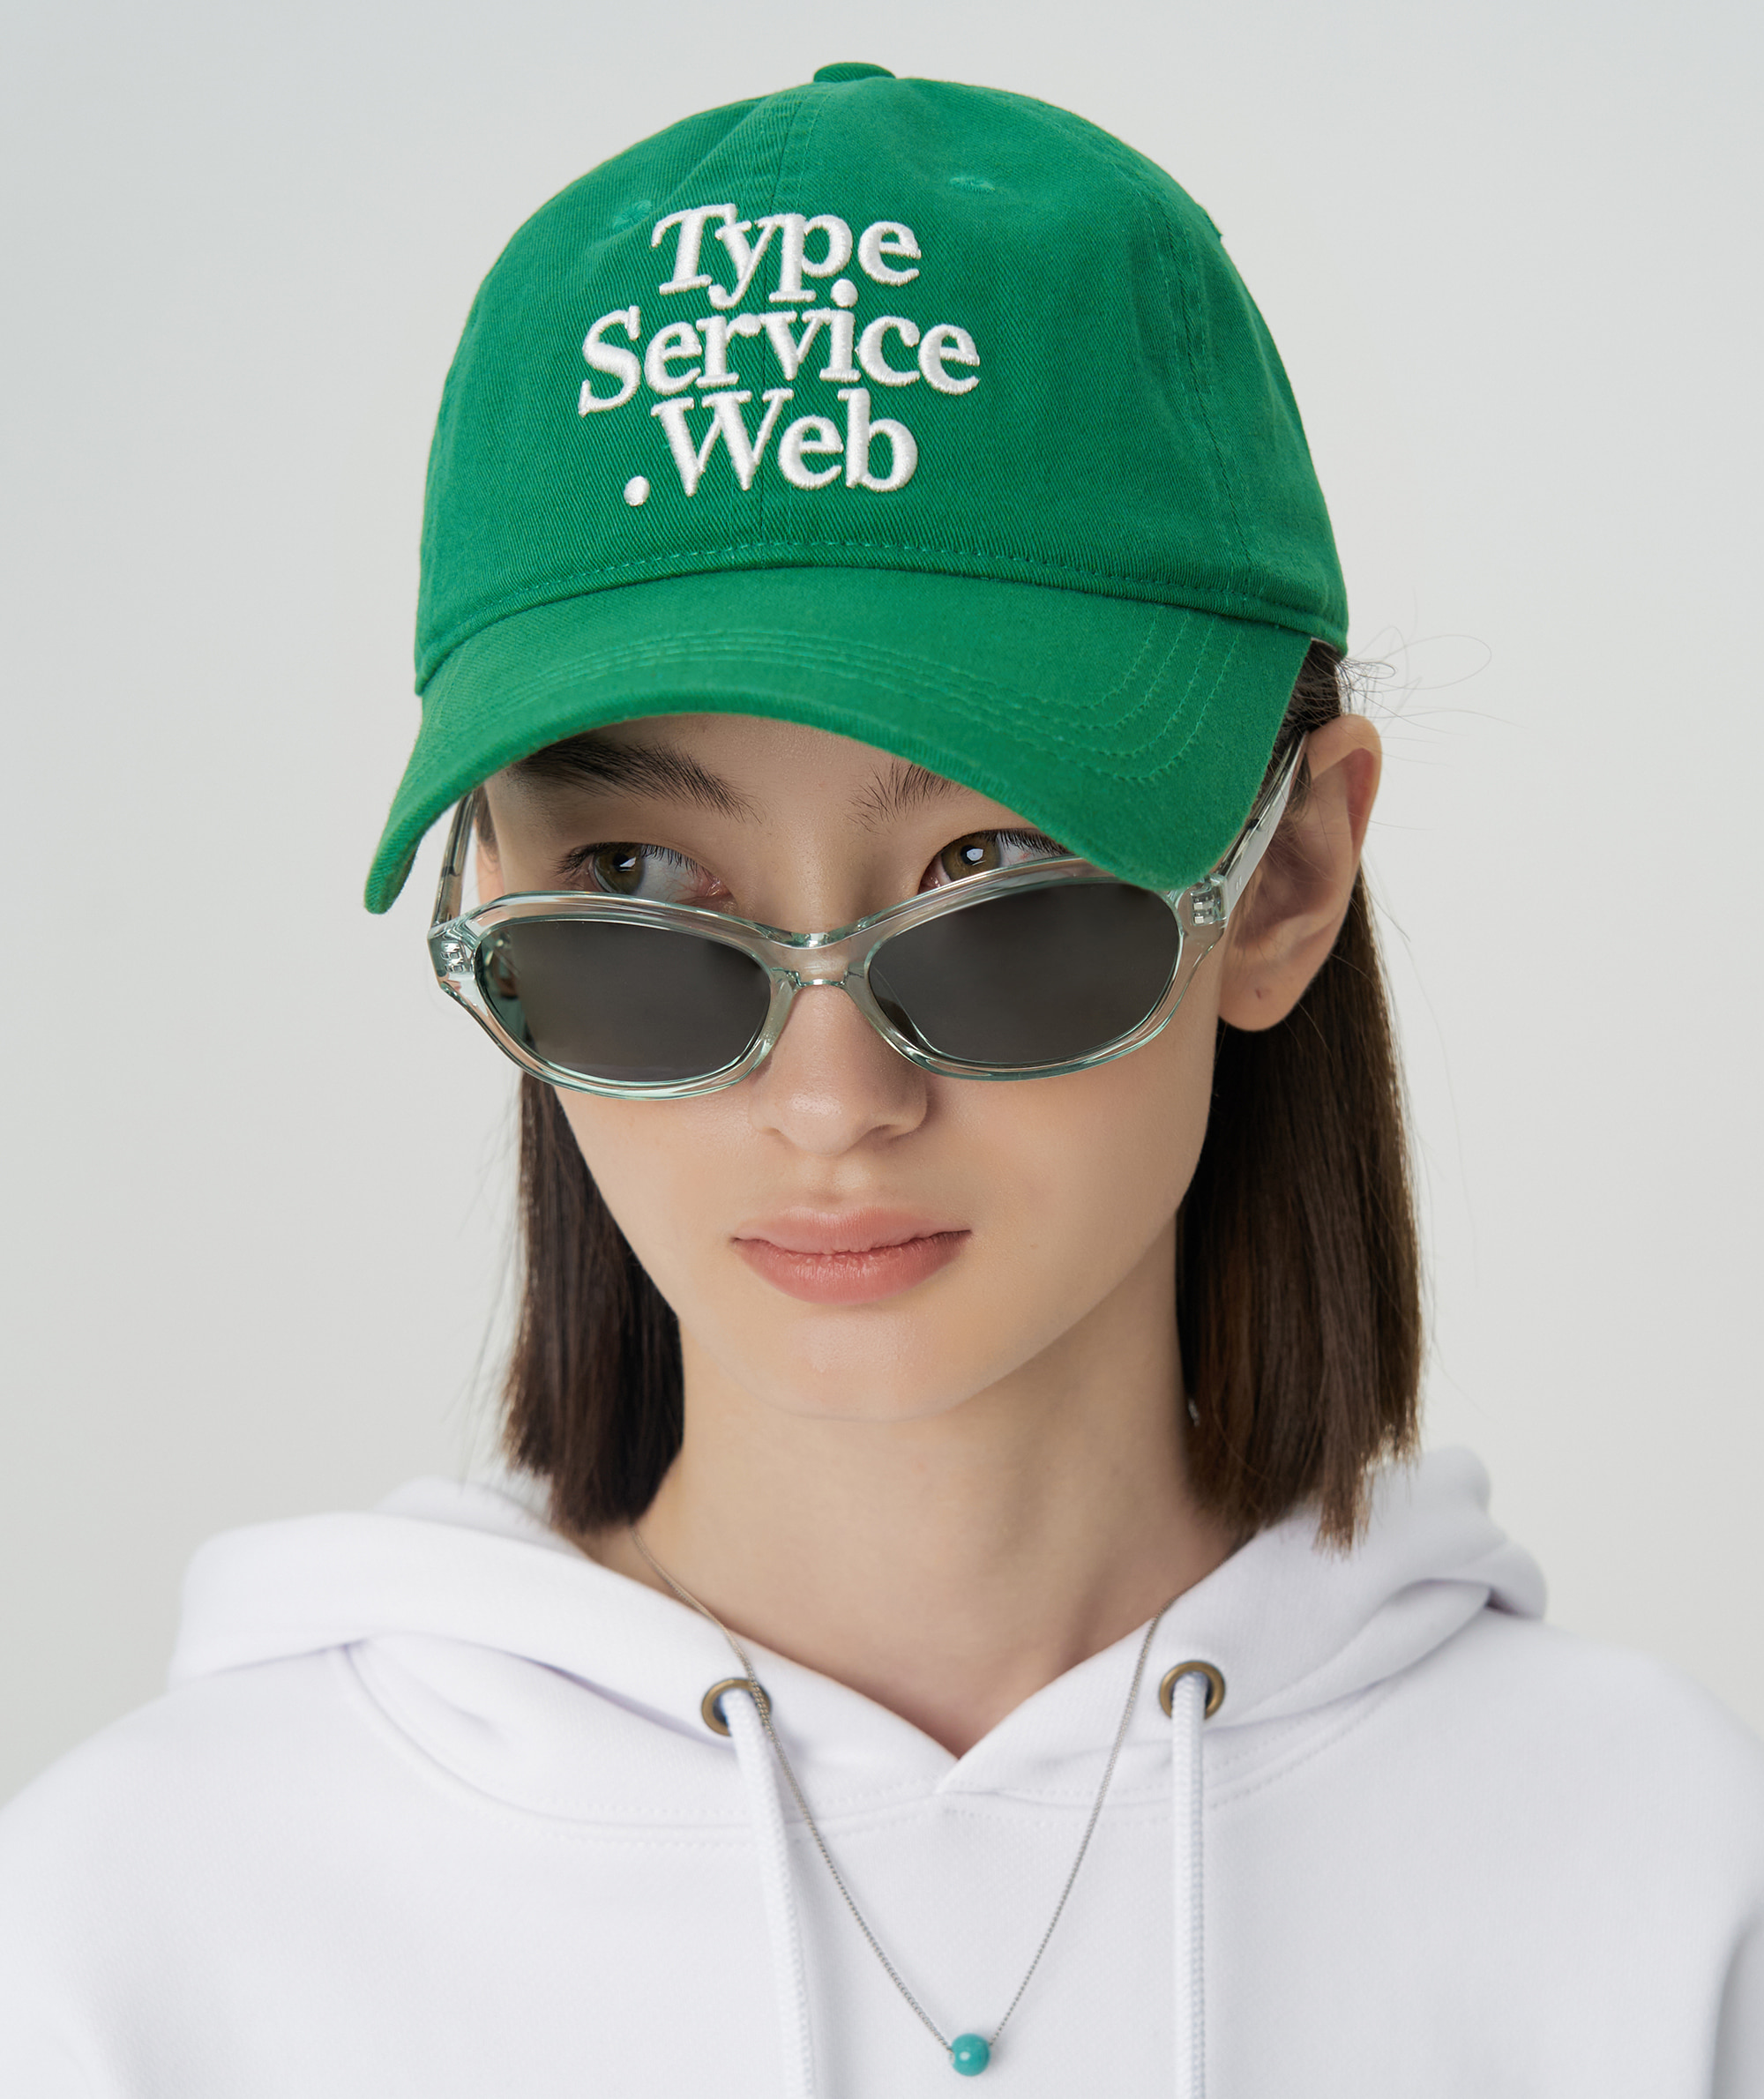 Typeservice Web Cap [Green]